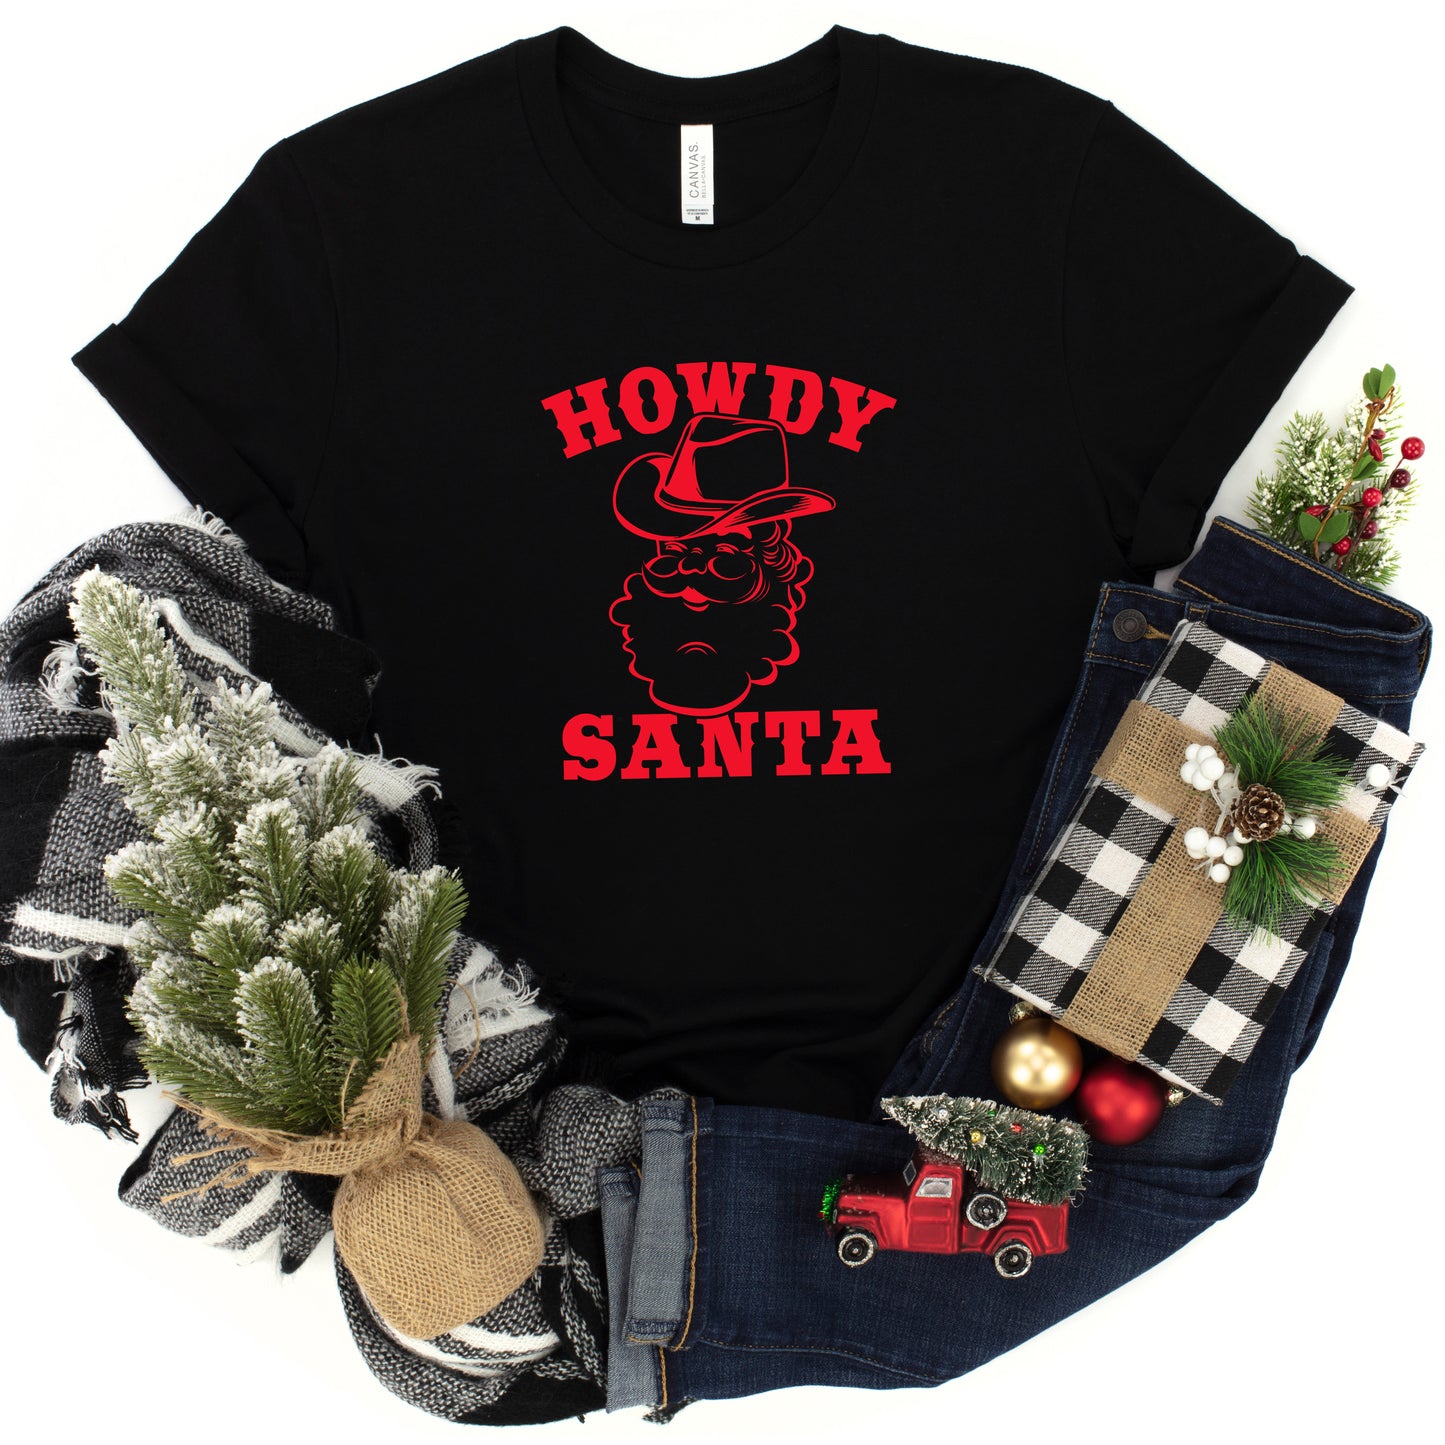 Howdy Santa Claus | Youth Short Sleeve Crew Neck